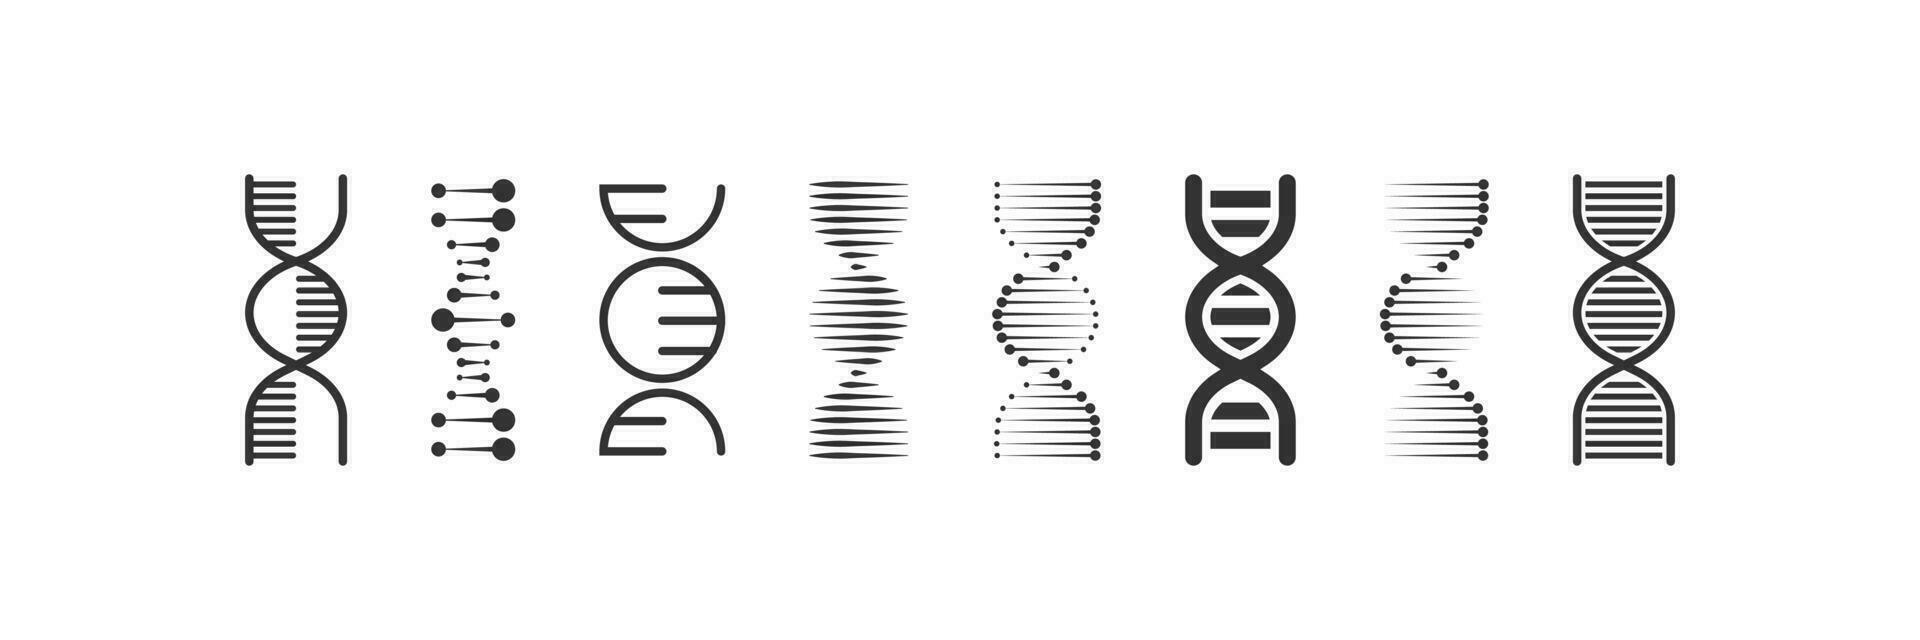 DNA or Chromosome icons set. Gene vector